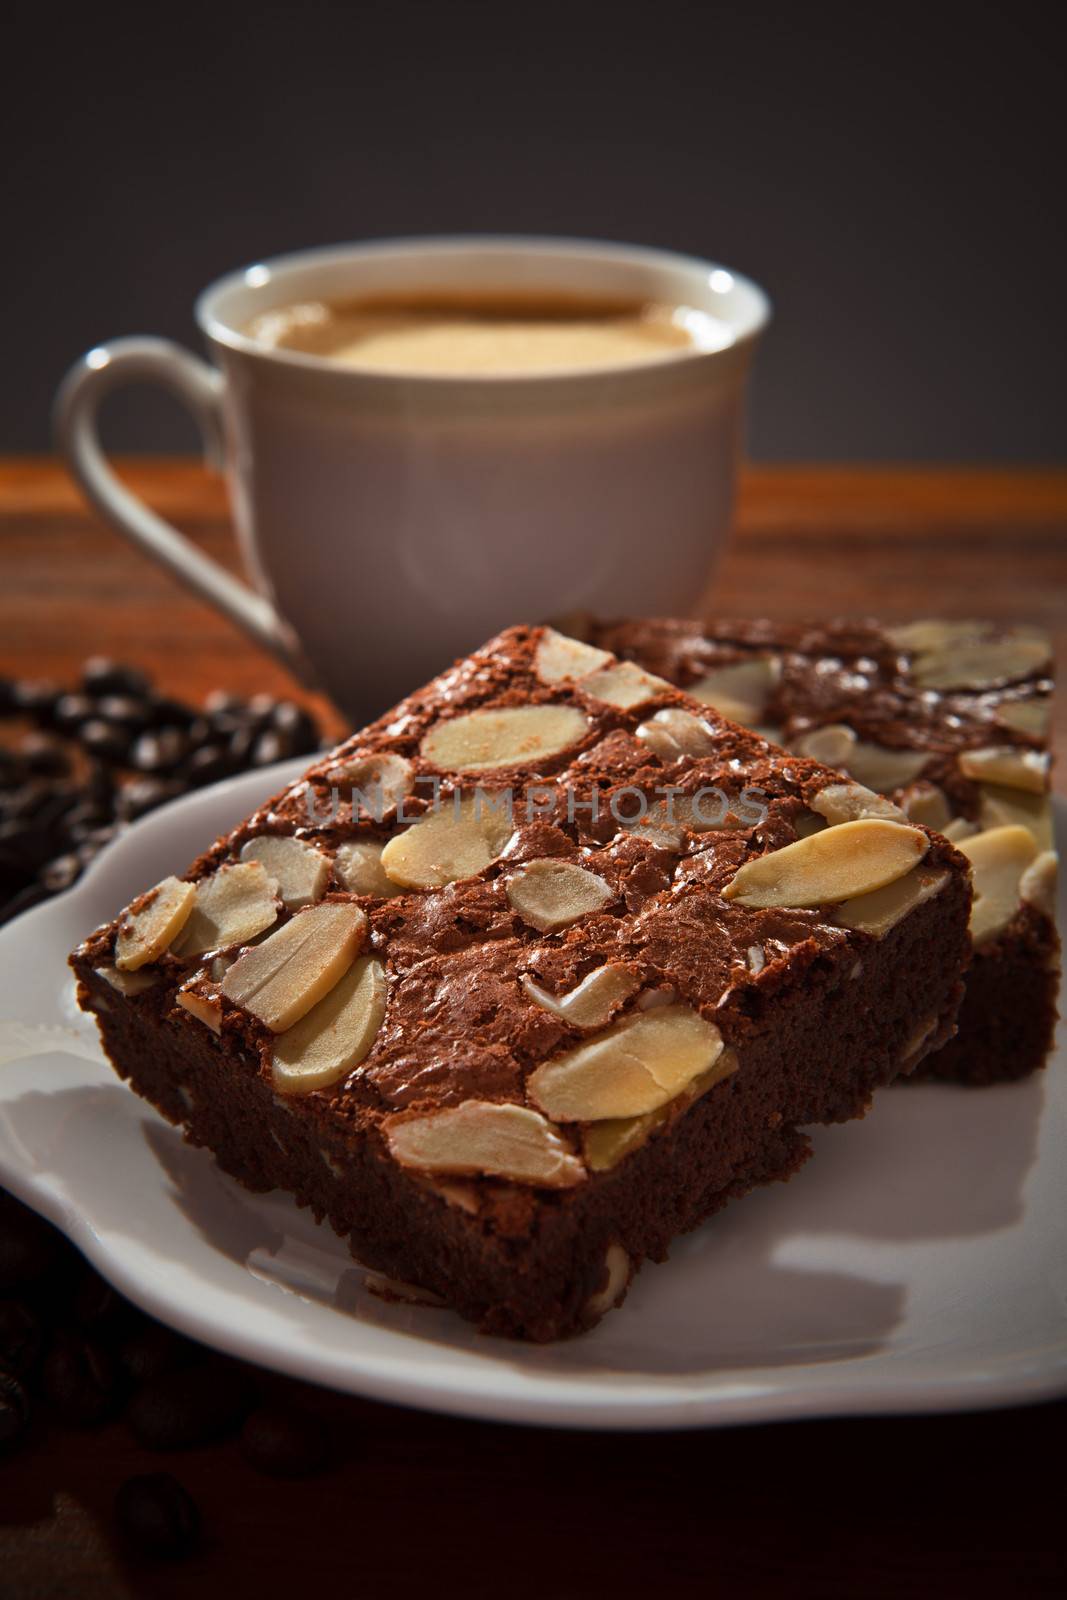 brownie cake and hot coffee by khunaspix